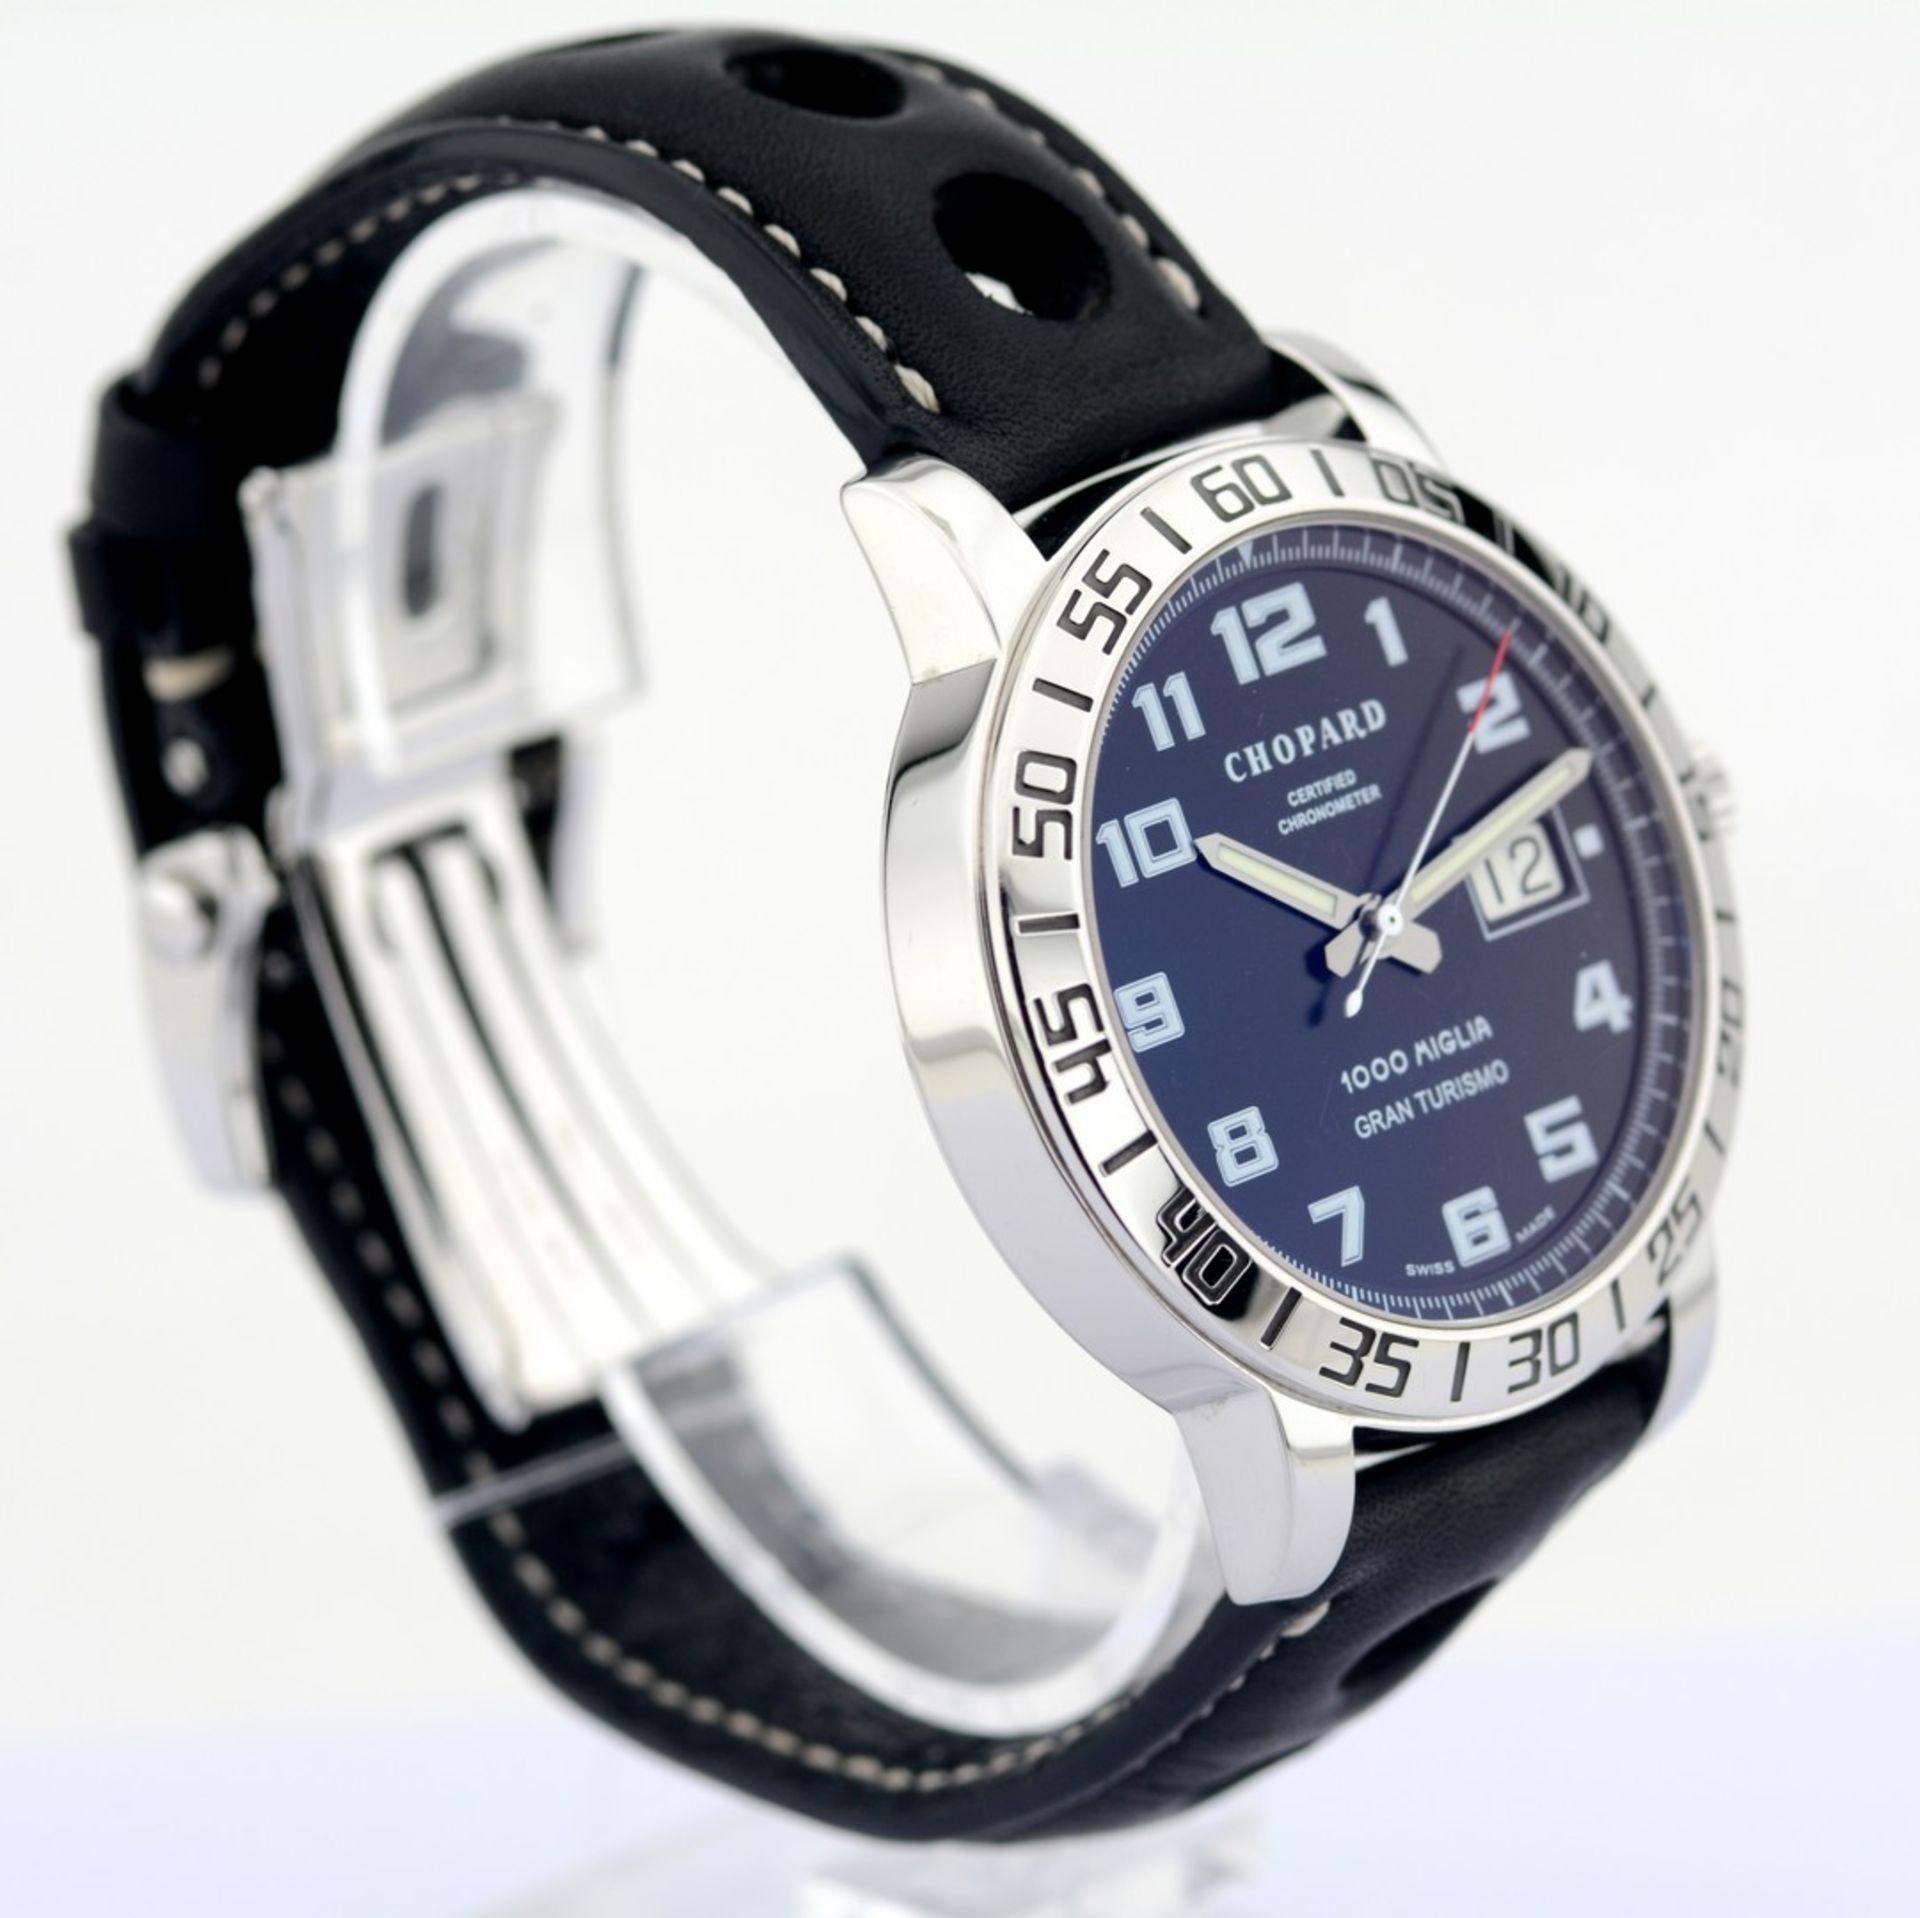 Chopard / 1000 Miglia Grand Turismo Prototype - Gentlemen's Steel Wristwatch - Image 5 of 8